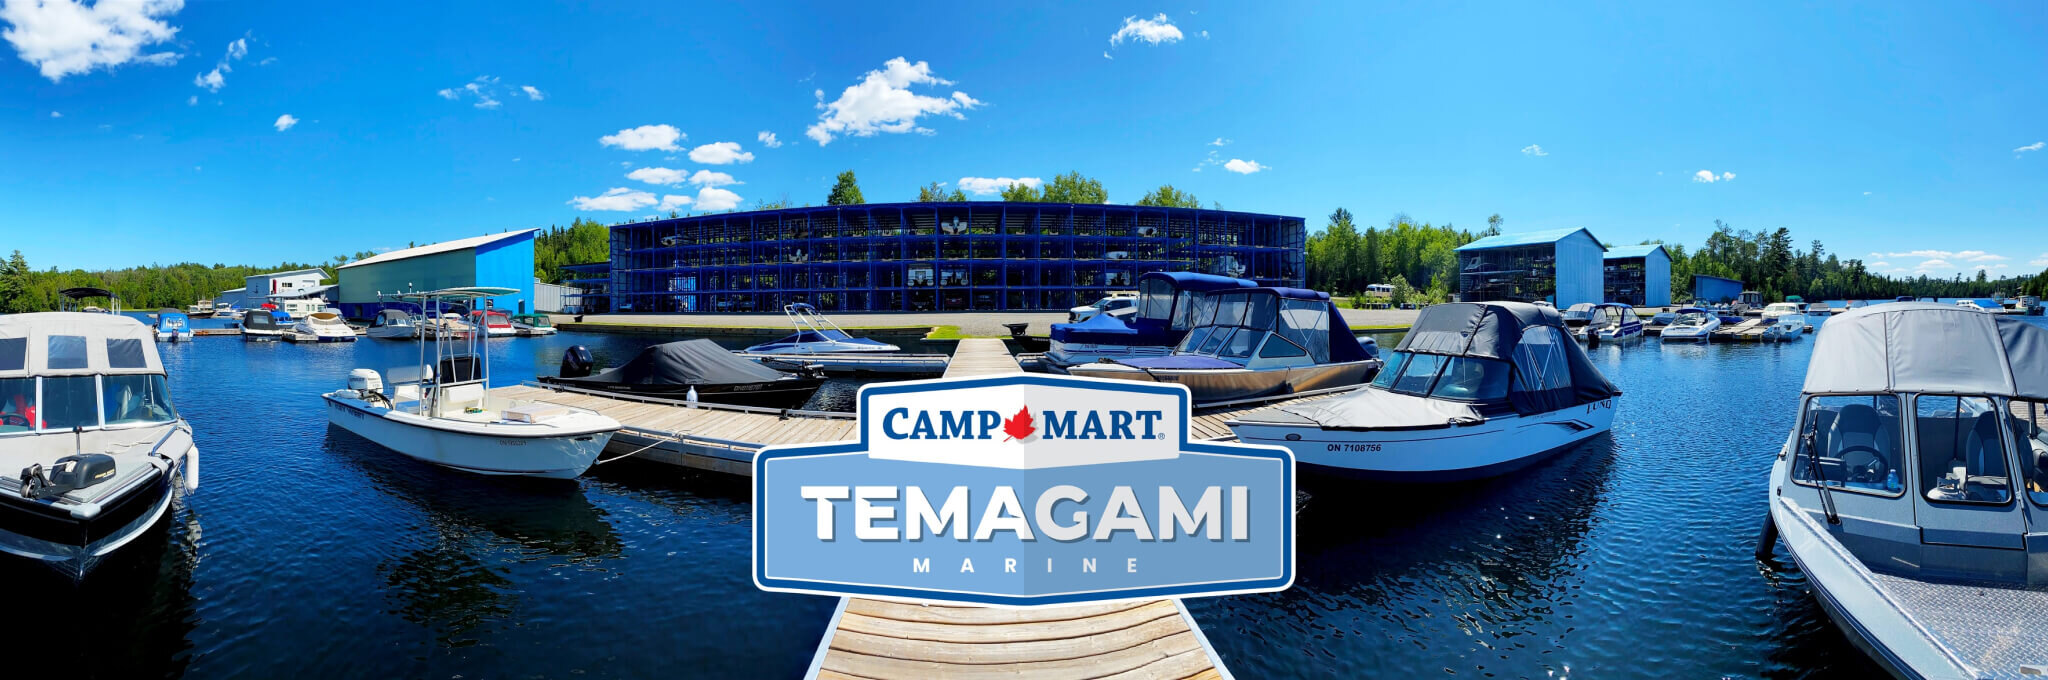 Temagami Marine Finance Request